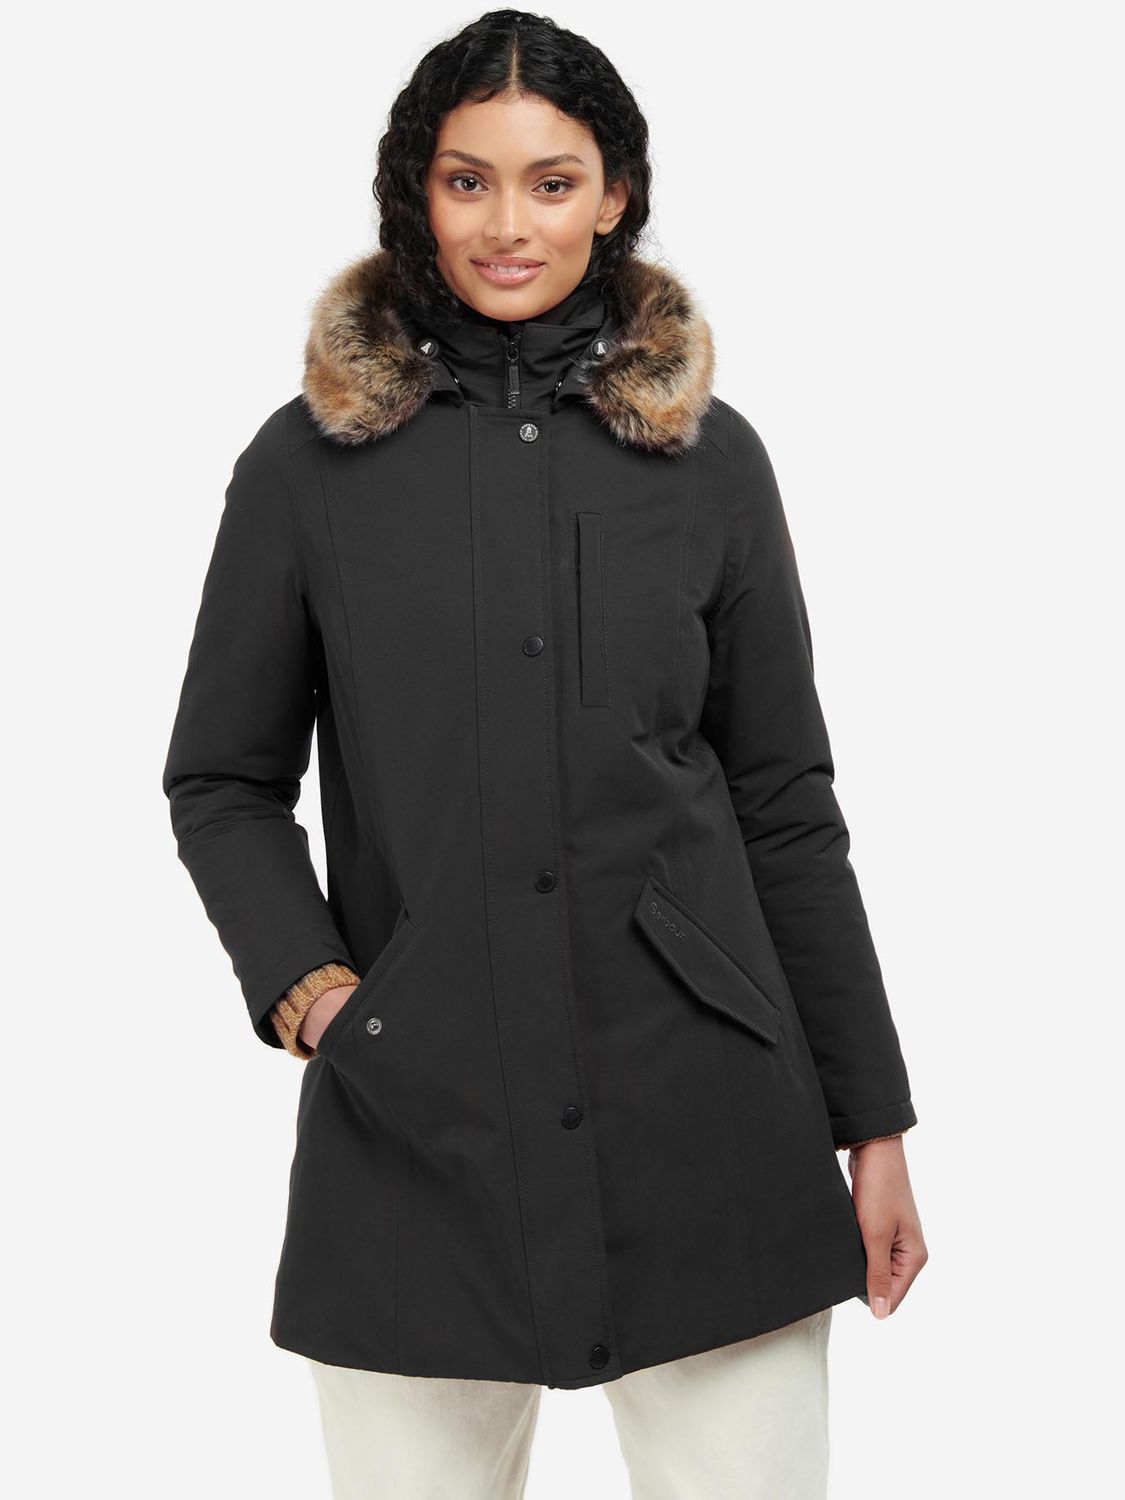 Barbour Maya Faux Fur Hood Jacket, Black at John Lewis & Partners